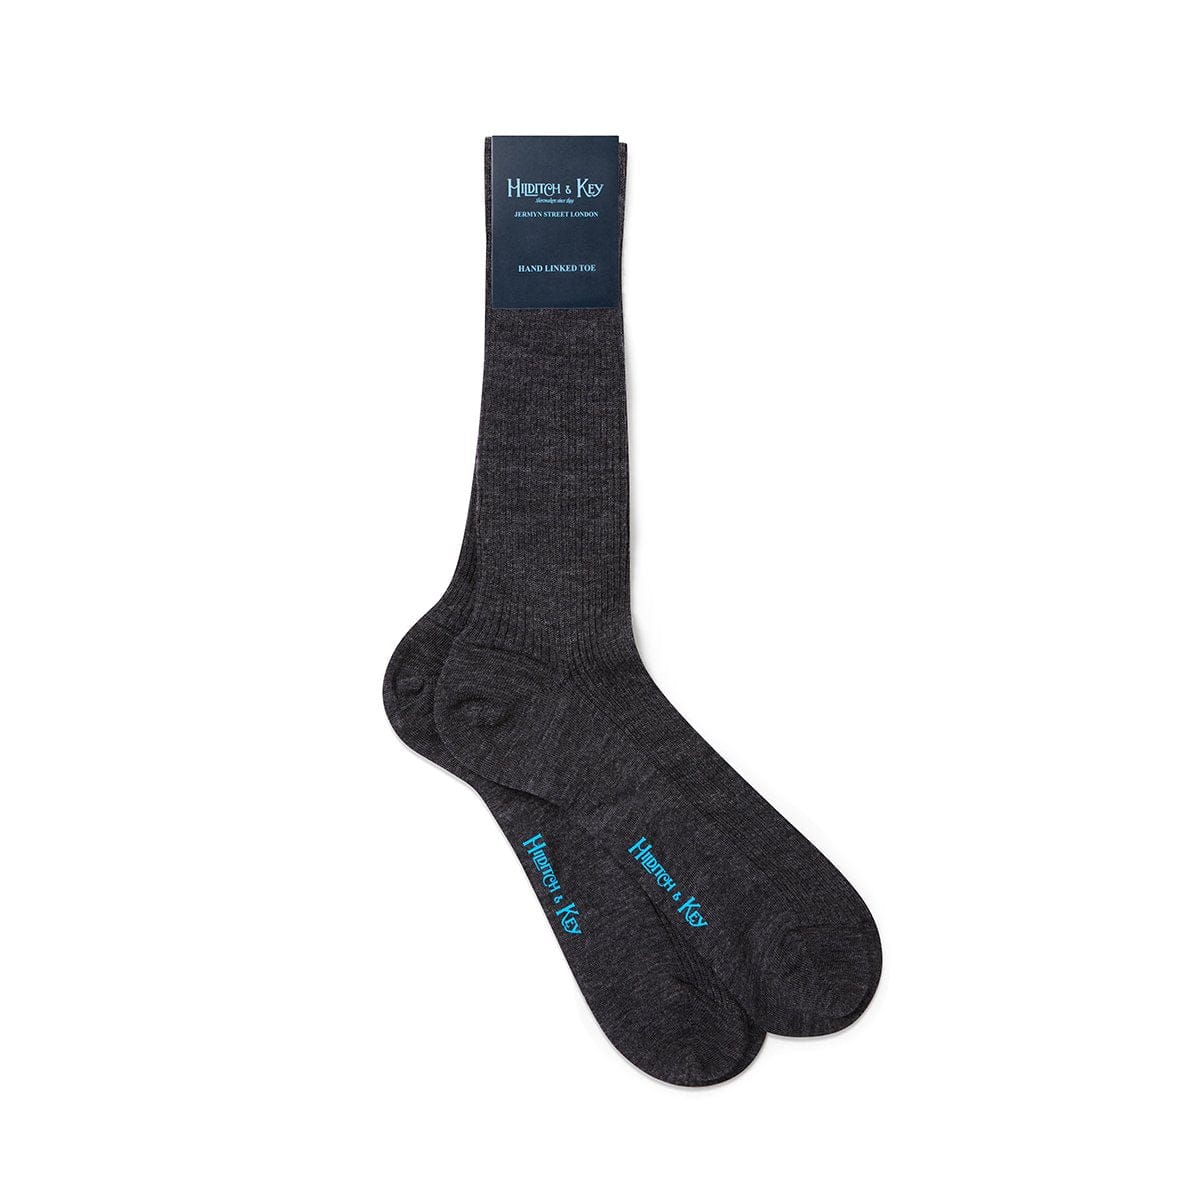 Short Dark Grey Melange Wool Socks